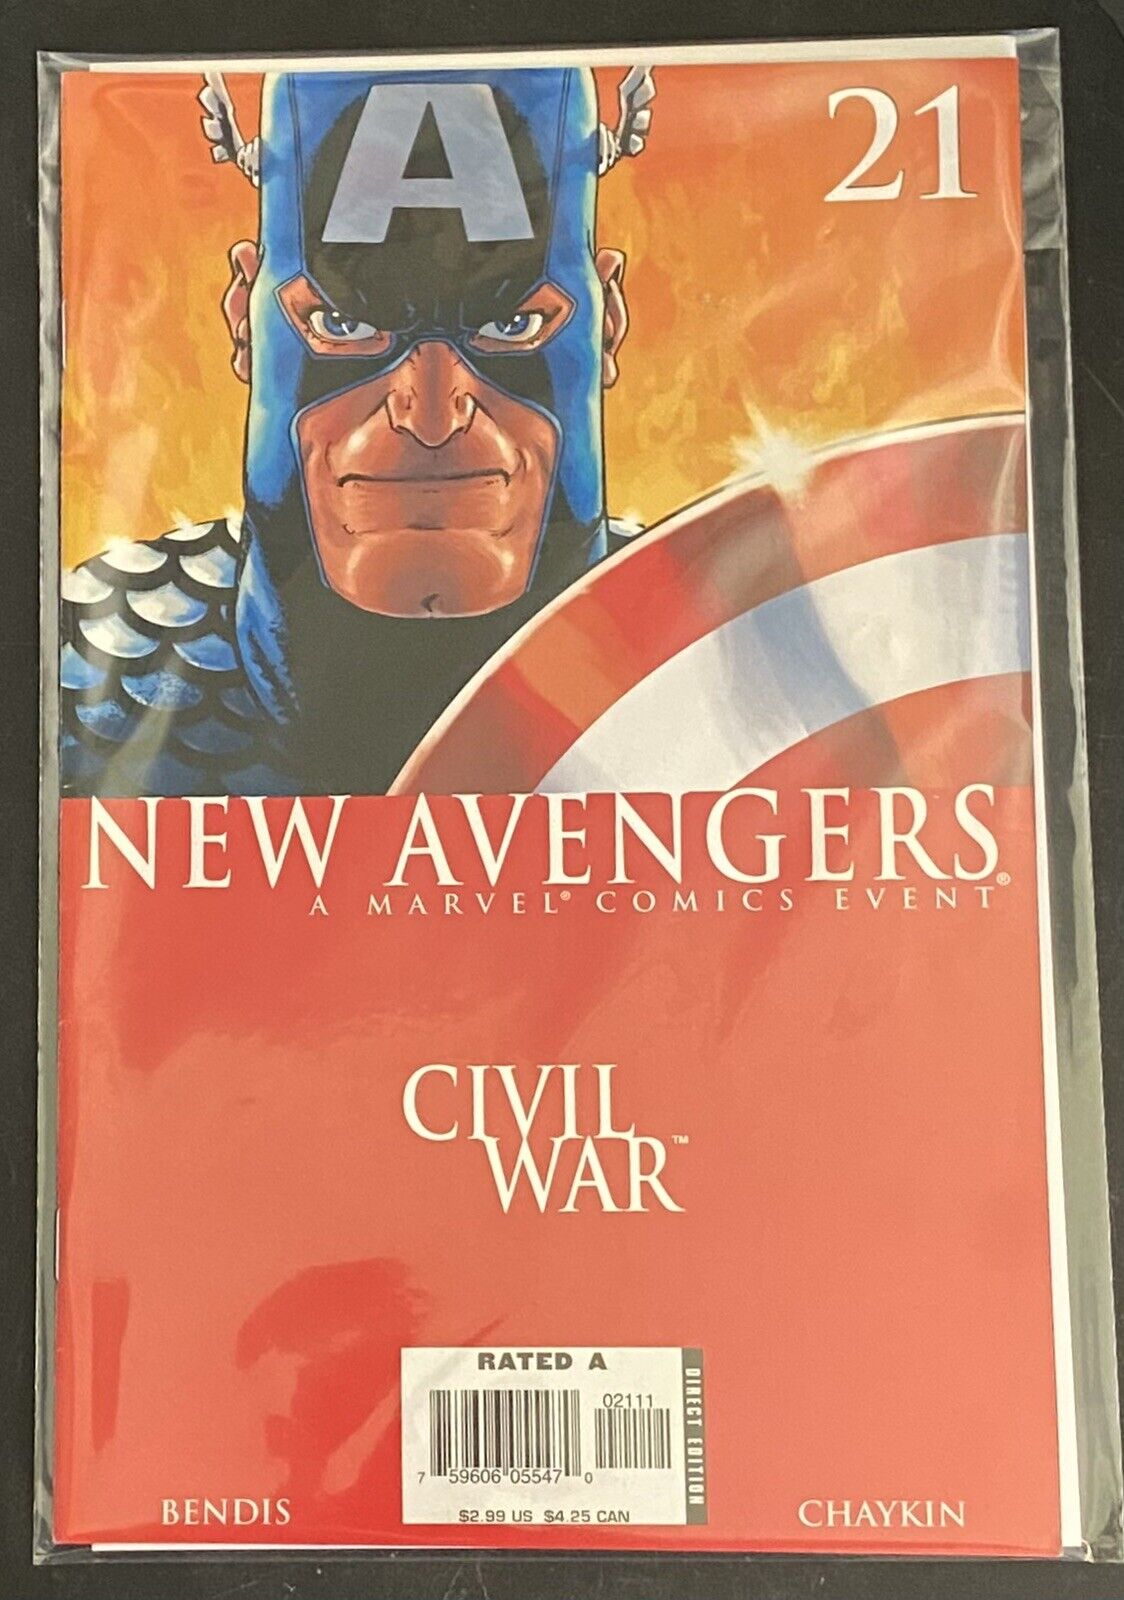 New Avengers #21 - Civil War - A Marvel Comics Event (2006)